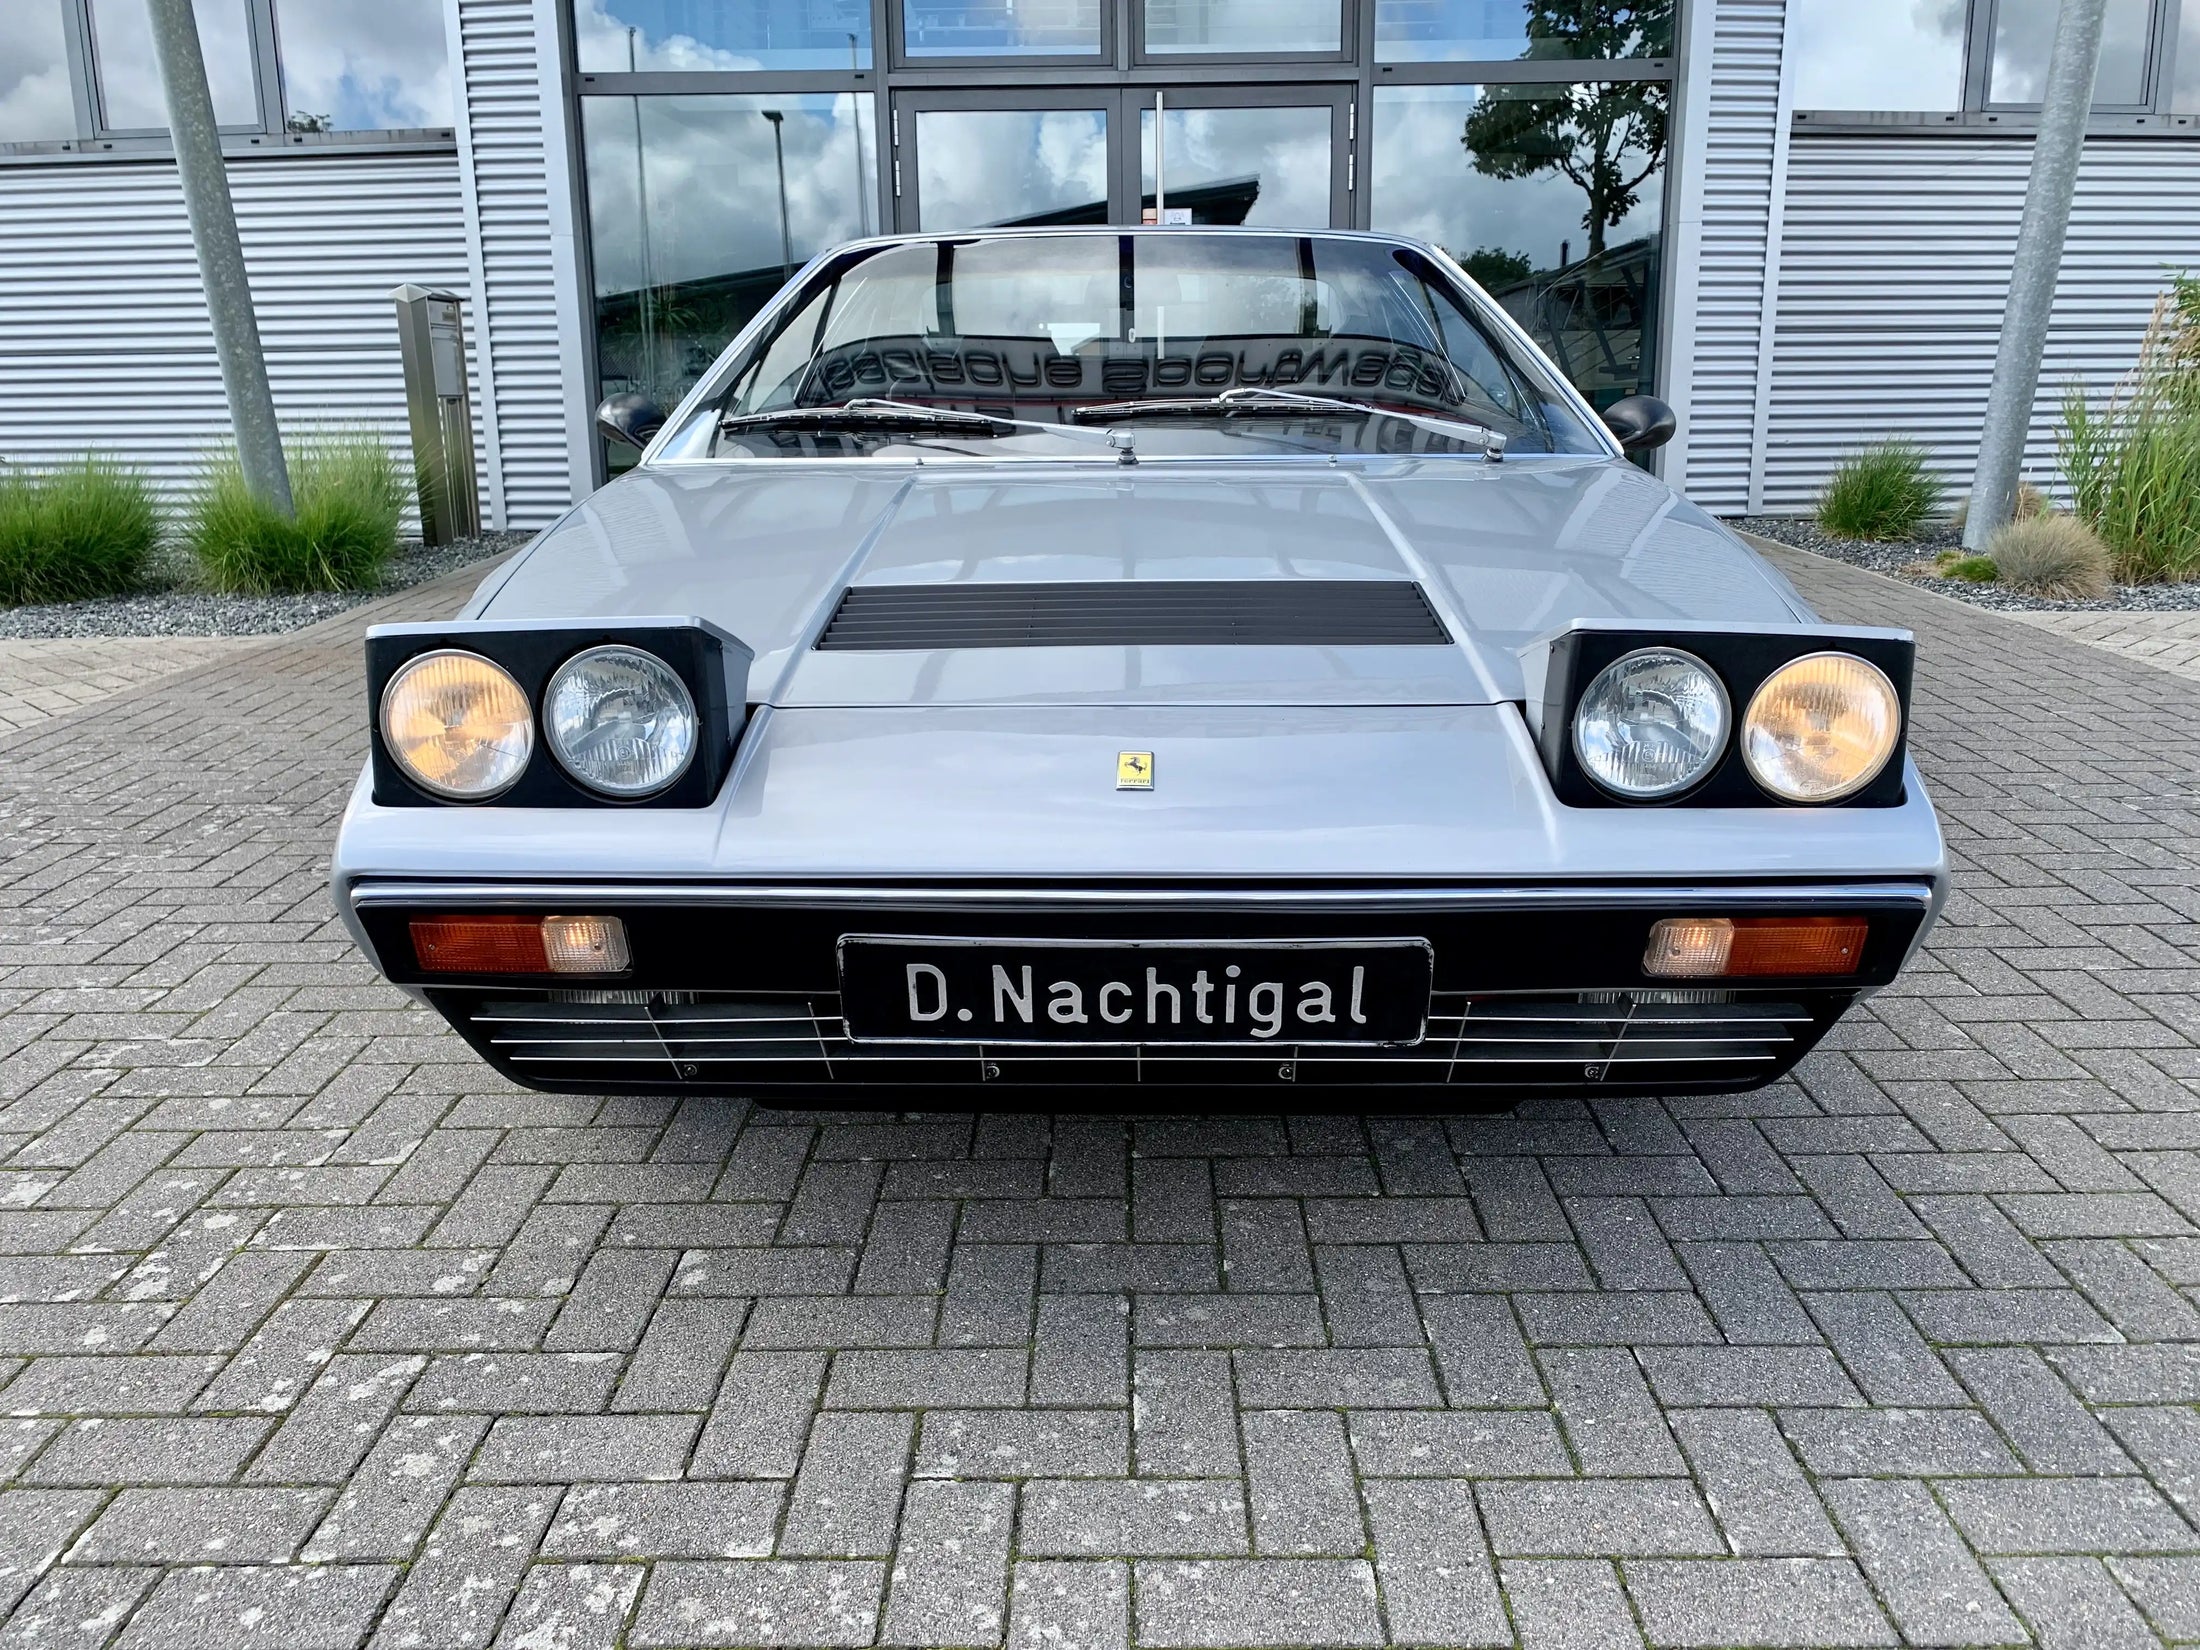 Ferrari Dino GT4 308 Coupé 1978, Dennis Nachtigal